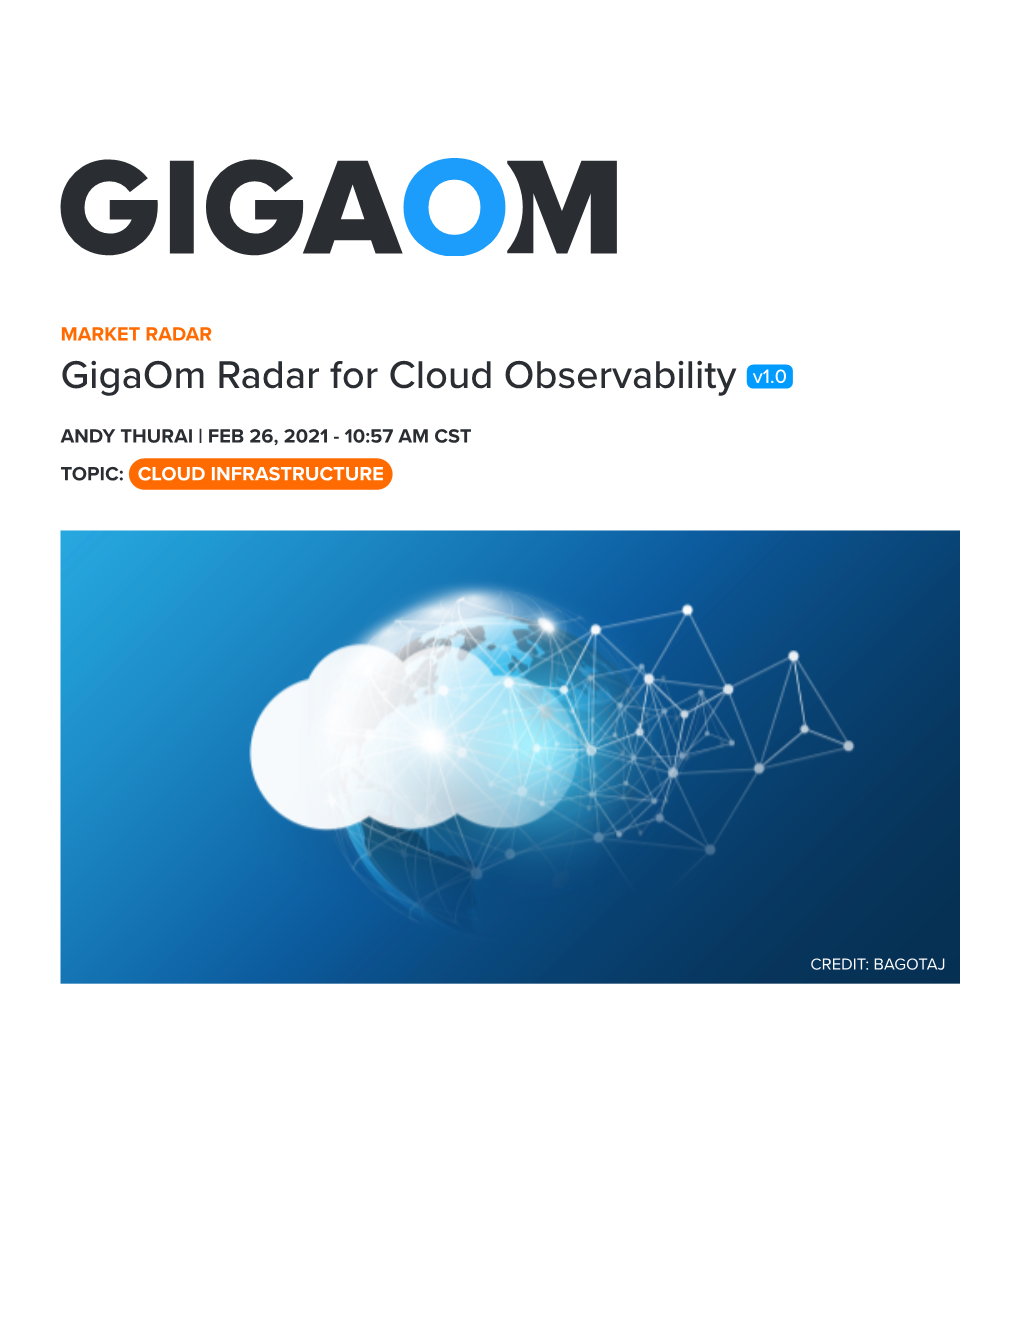 Gigaom Radar for Cloud Observability V1.0